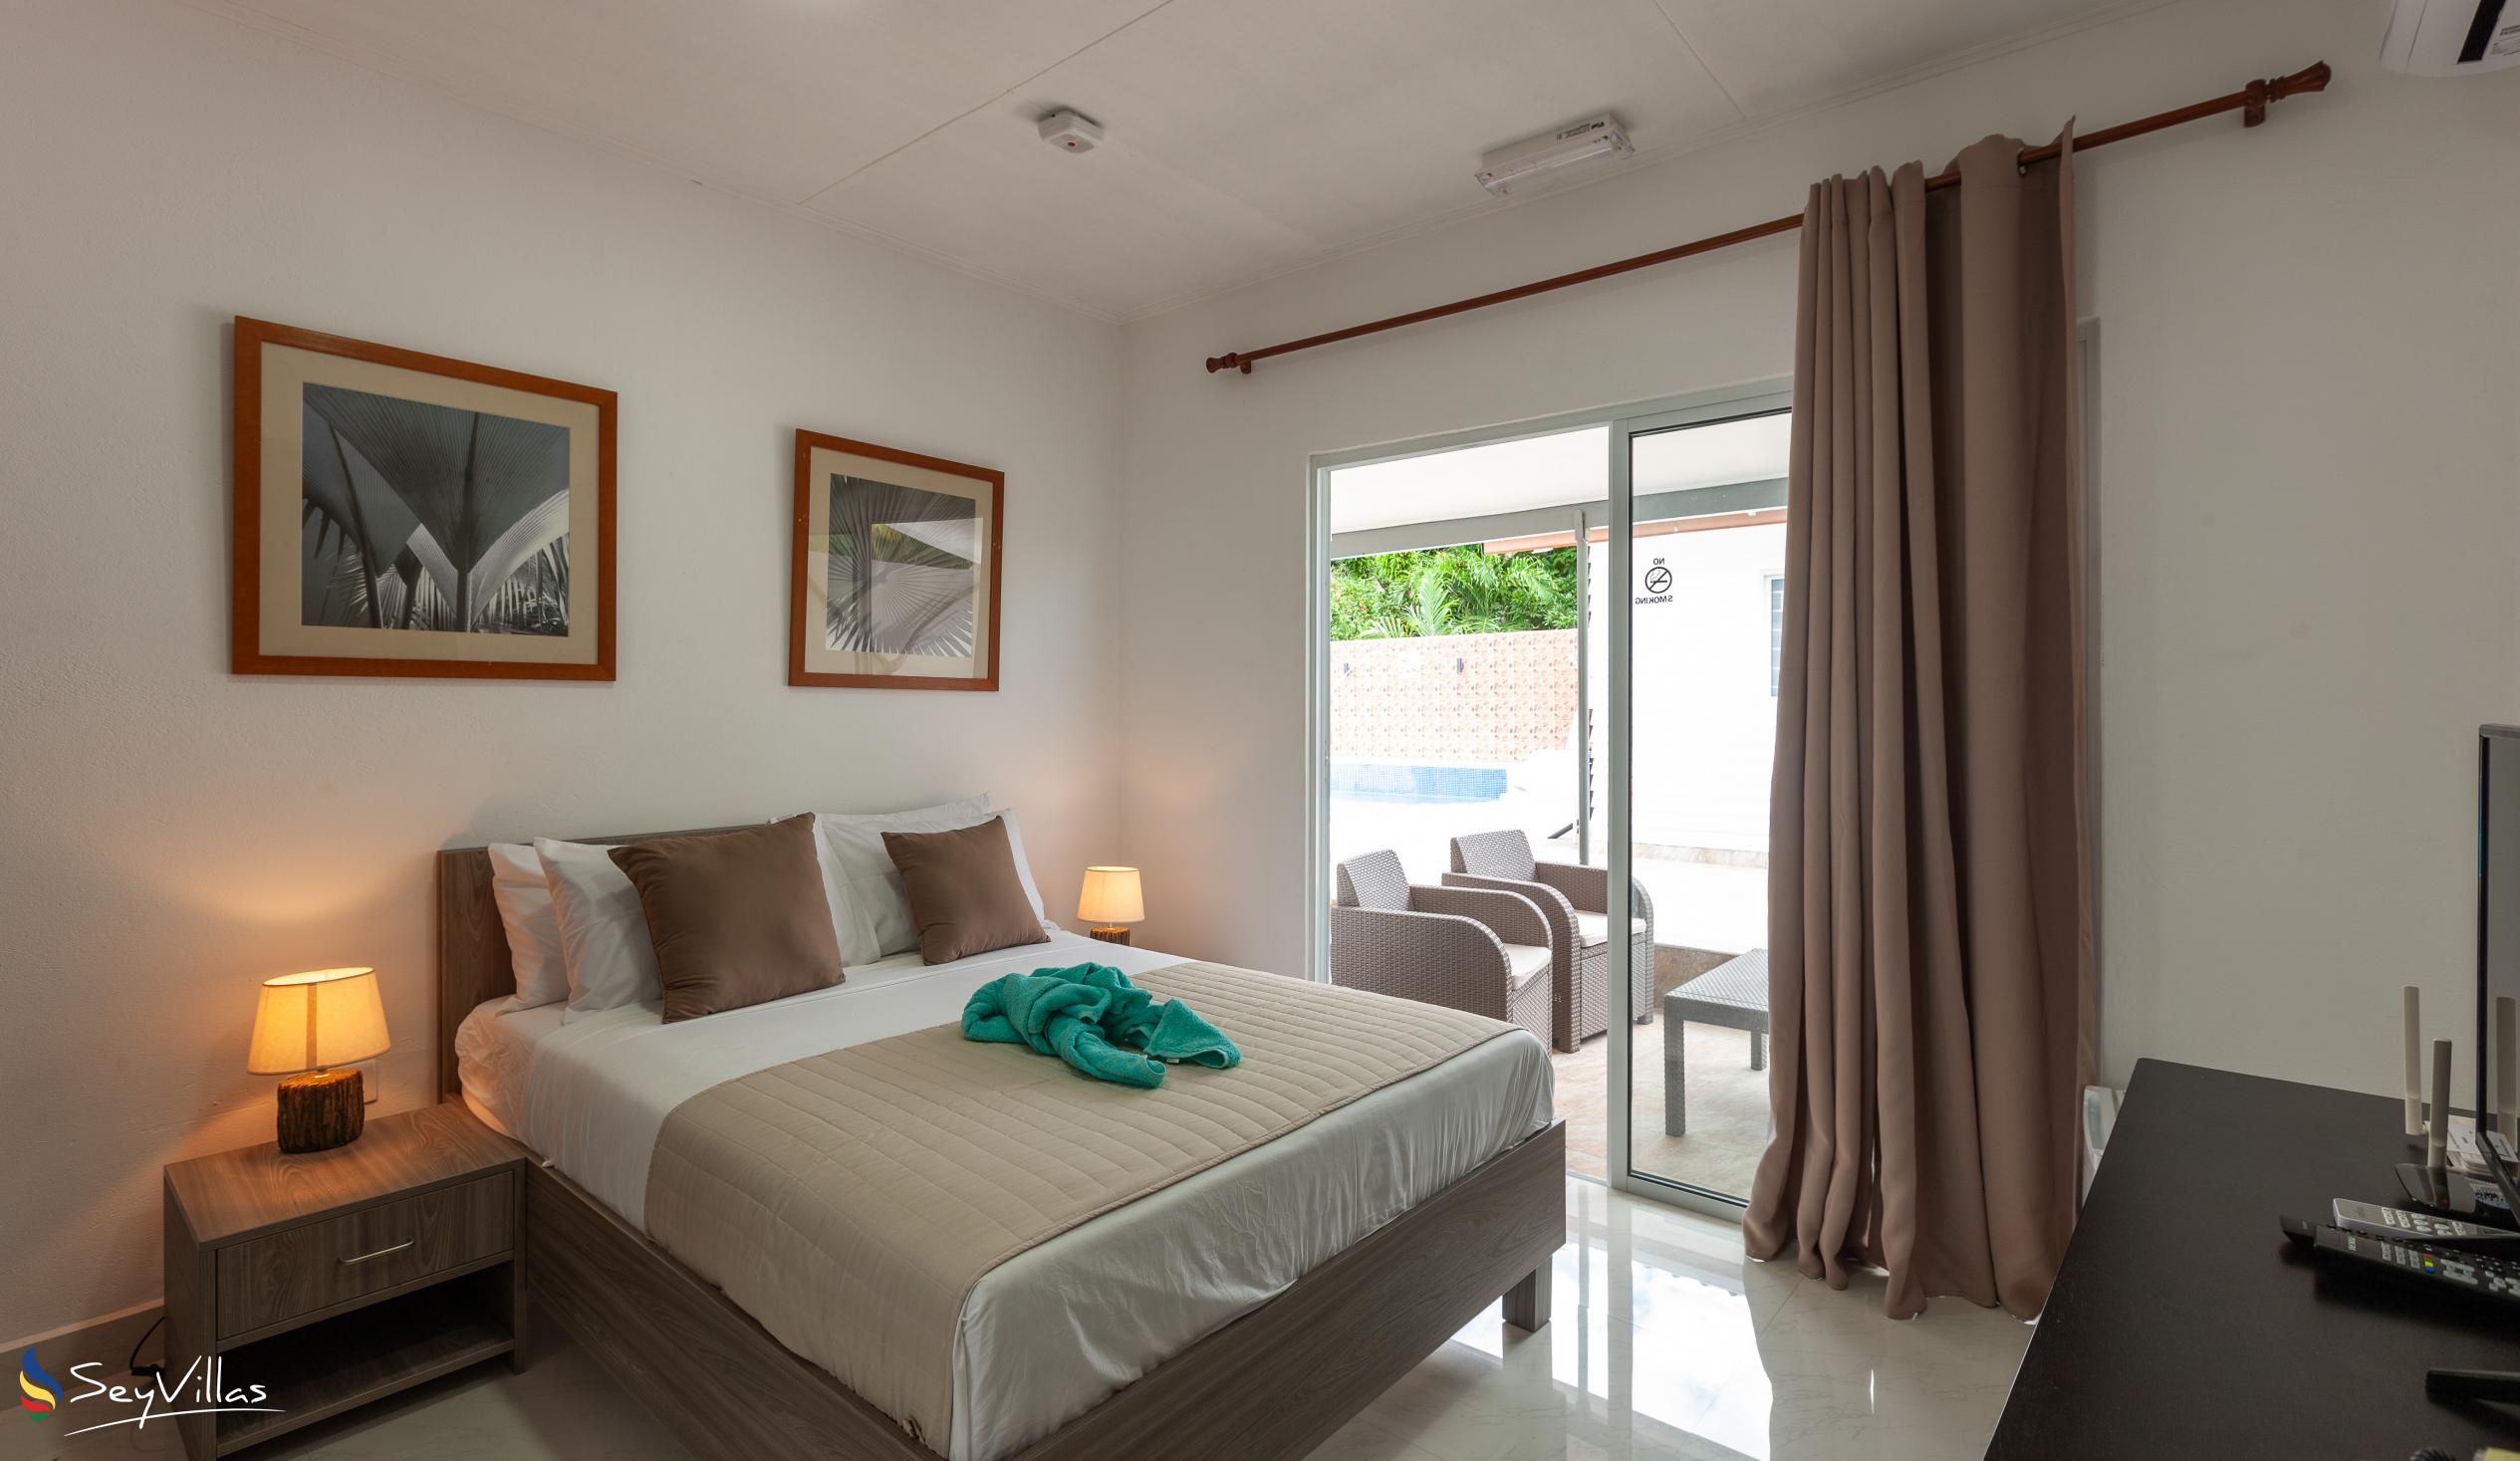 Foto 41: Hotel Plein Soleil - Camera Familiare - Praslin (Seychelles)